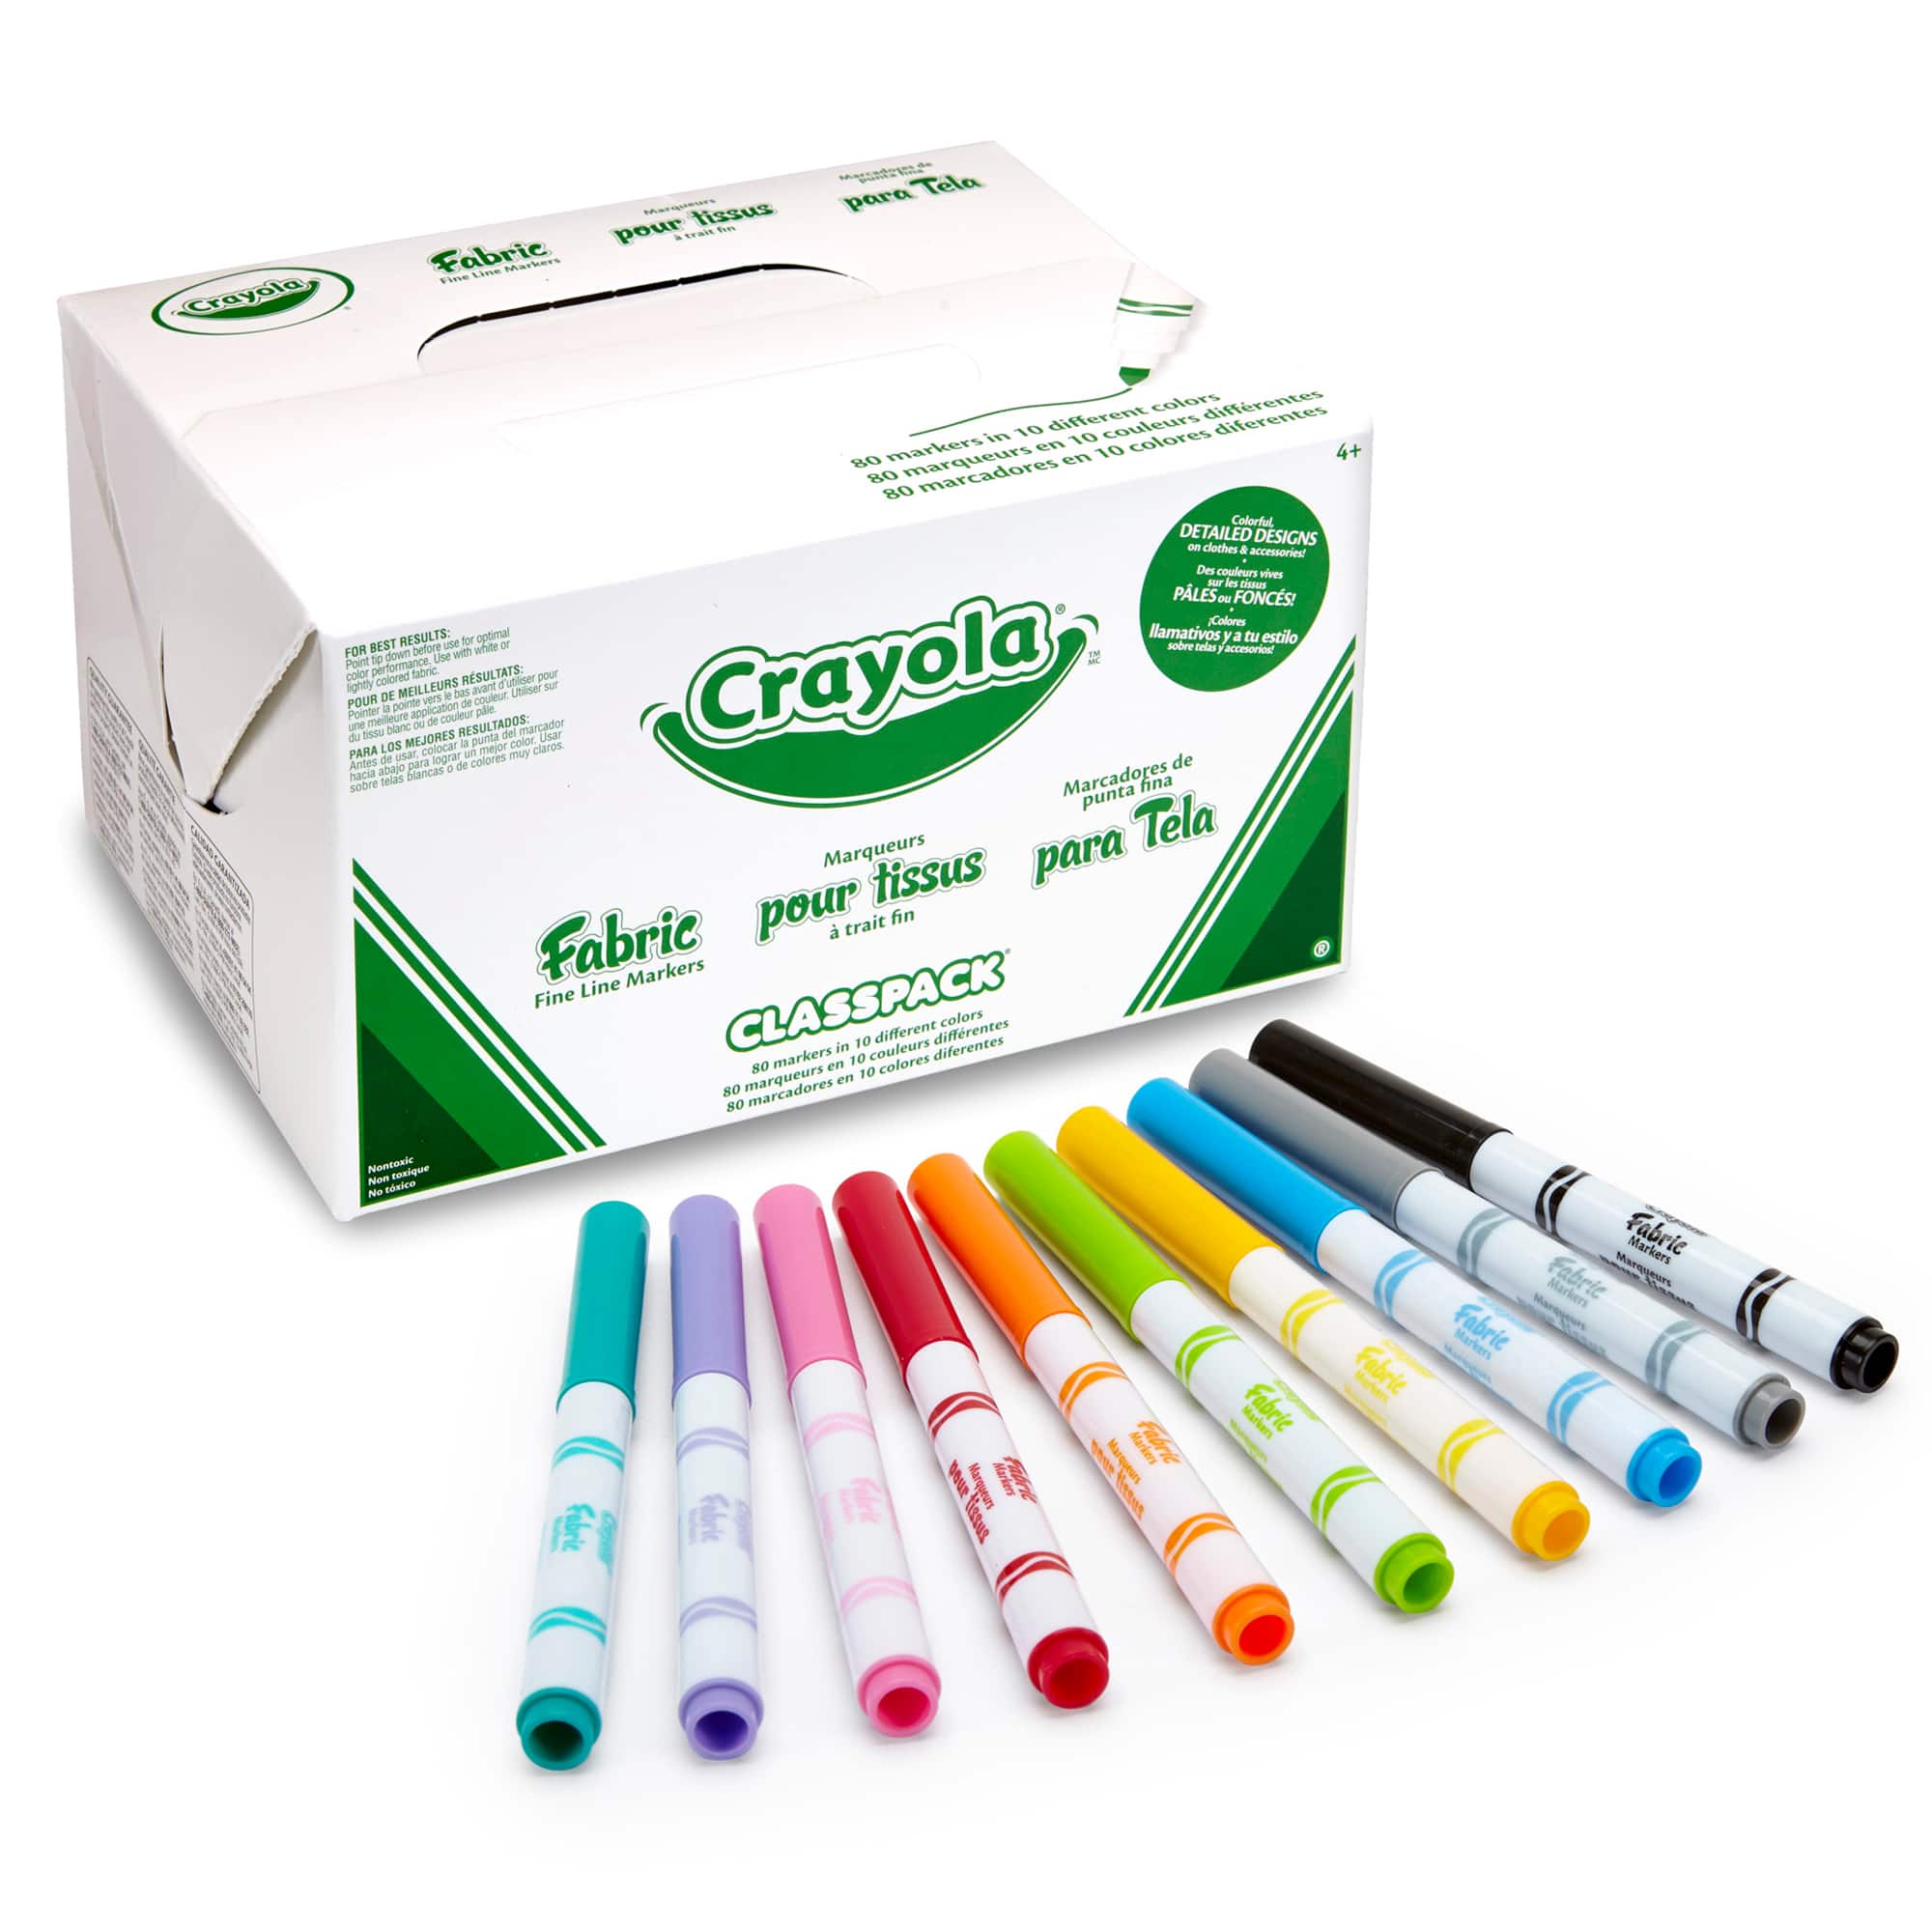 Crayola Marker Design Studio Craft Kit Supplies Create Custom